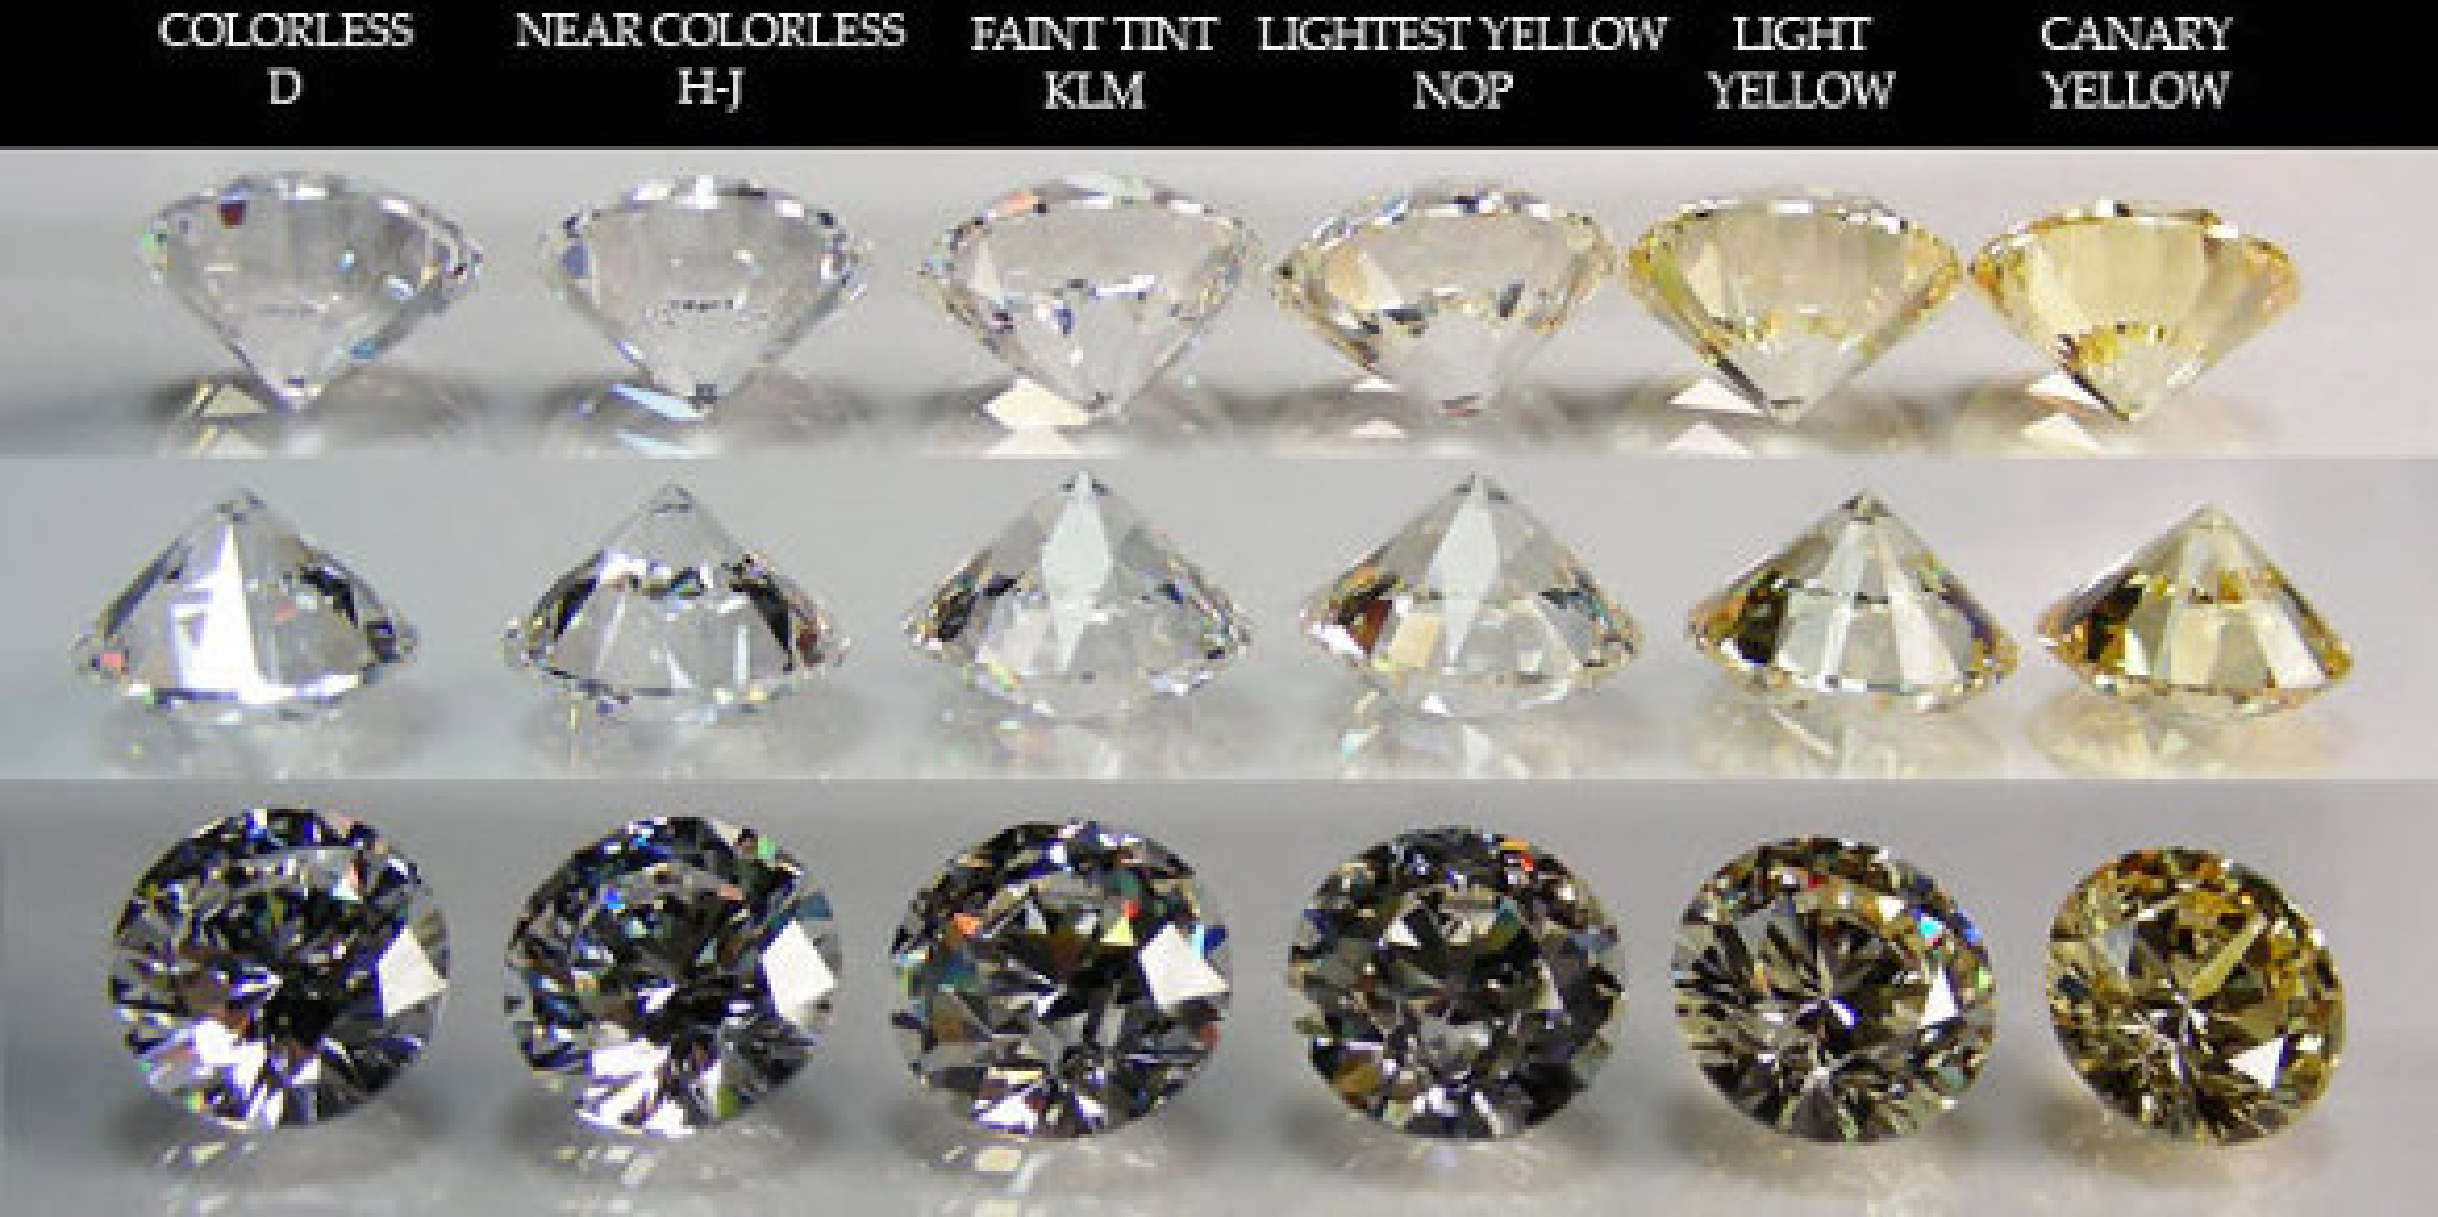 h color diamond worth the money or over priced - diamond education alexander watchmaker jeweller | diamond colour chart h